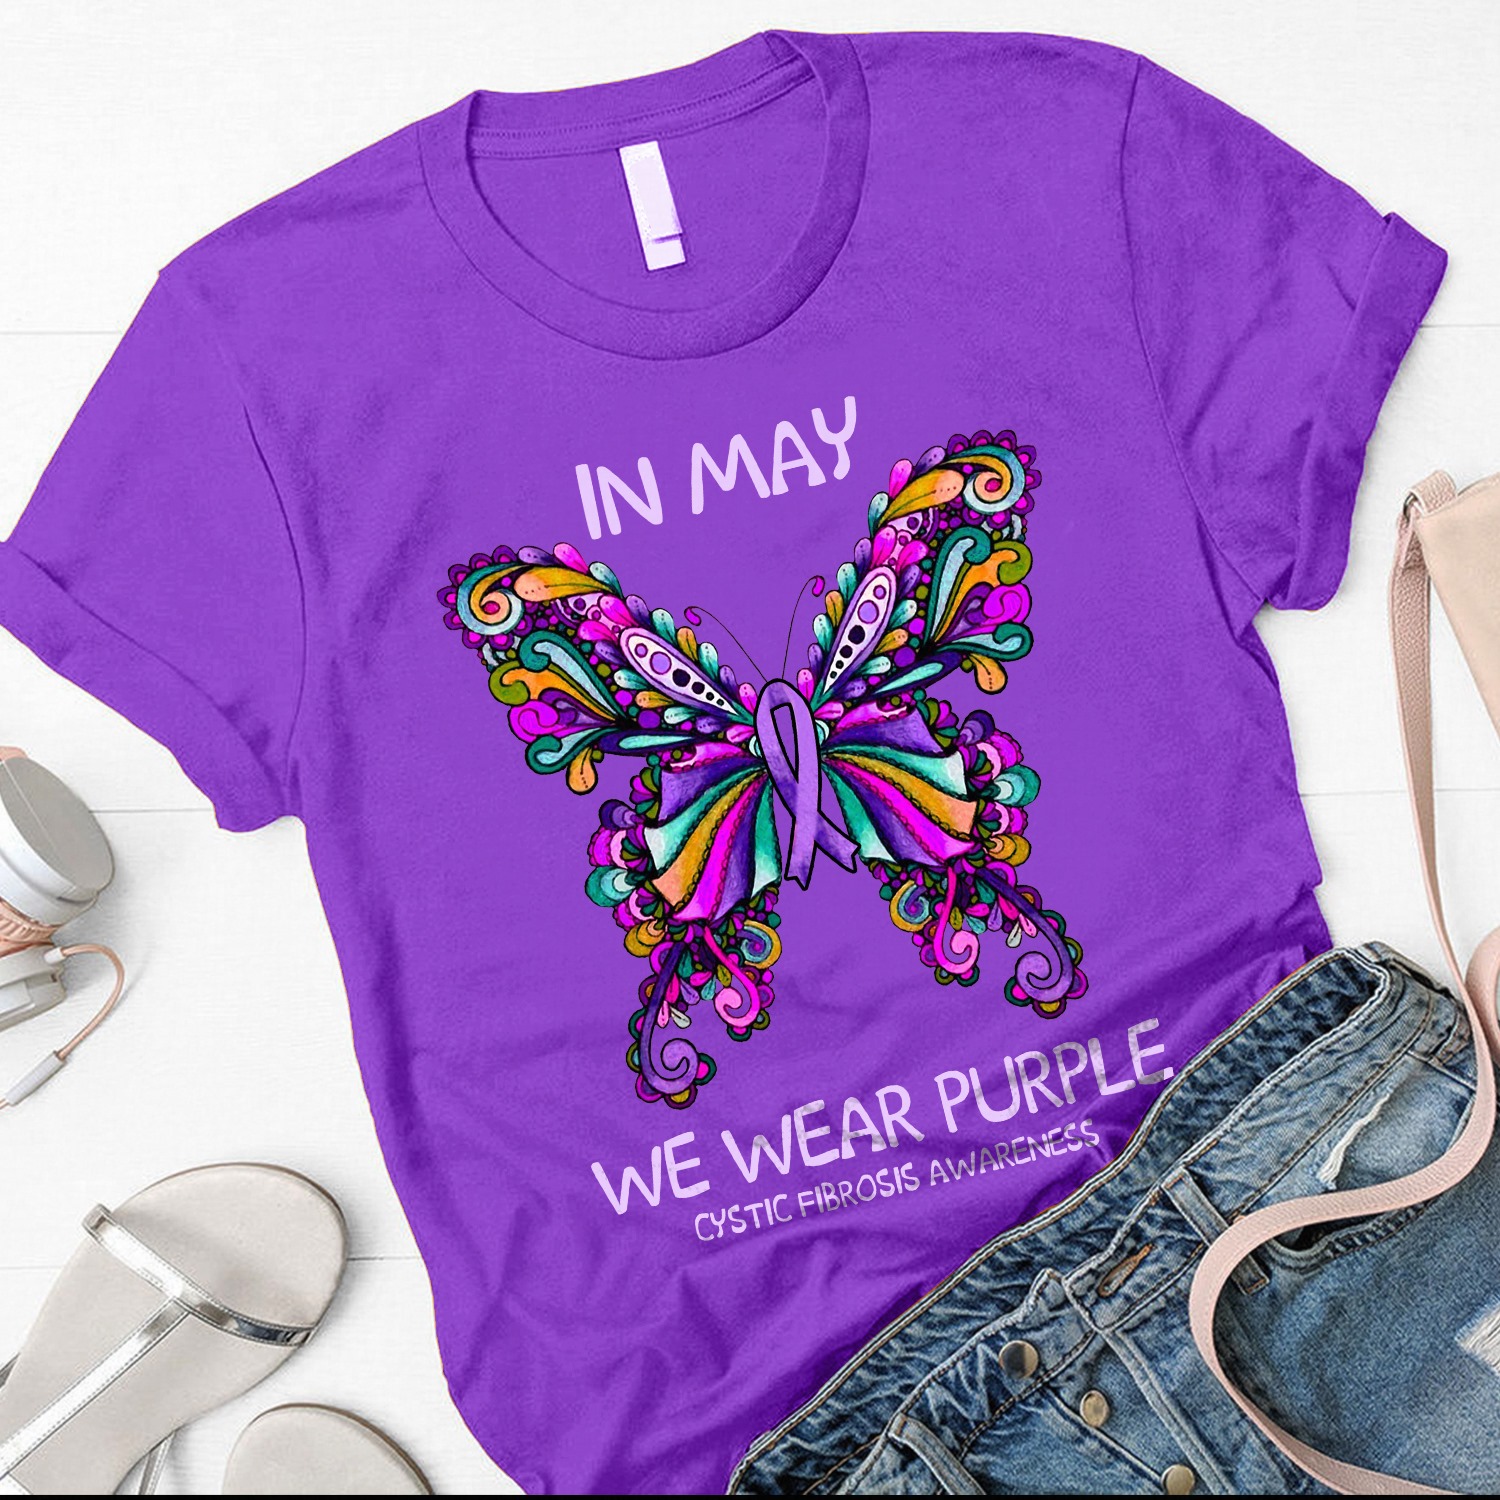 In may we wear purple - Cystic fibrosis awareness, butterflies lover